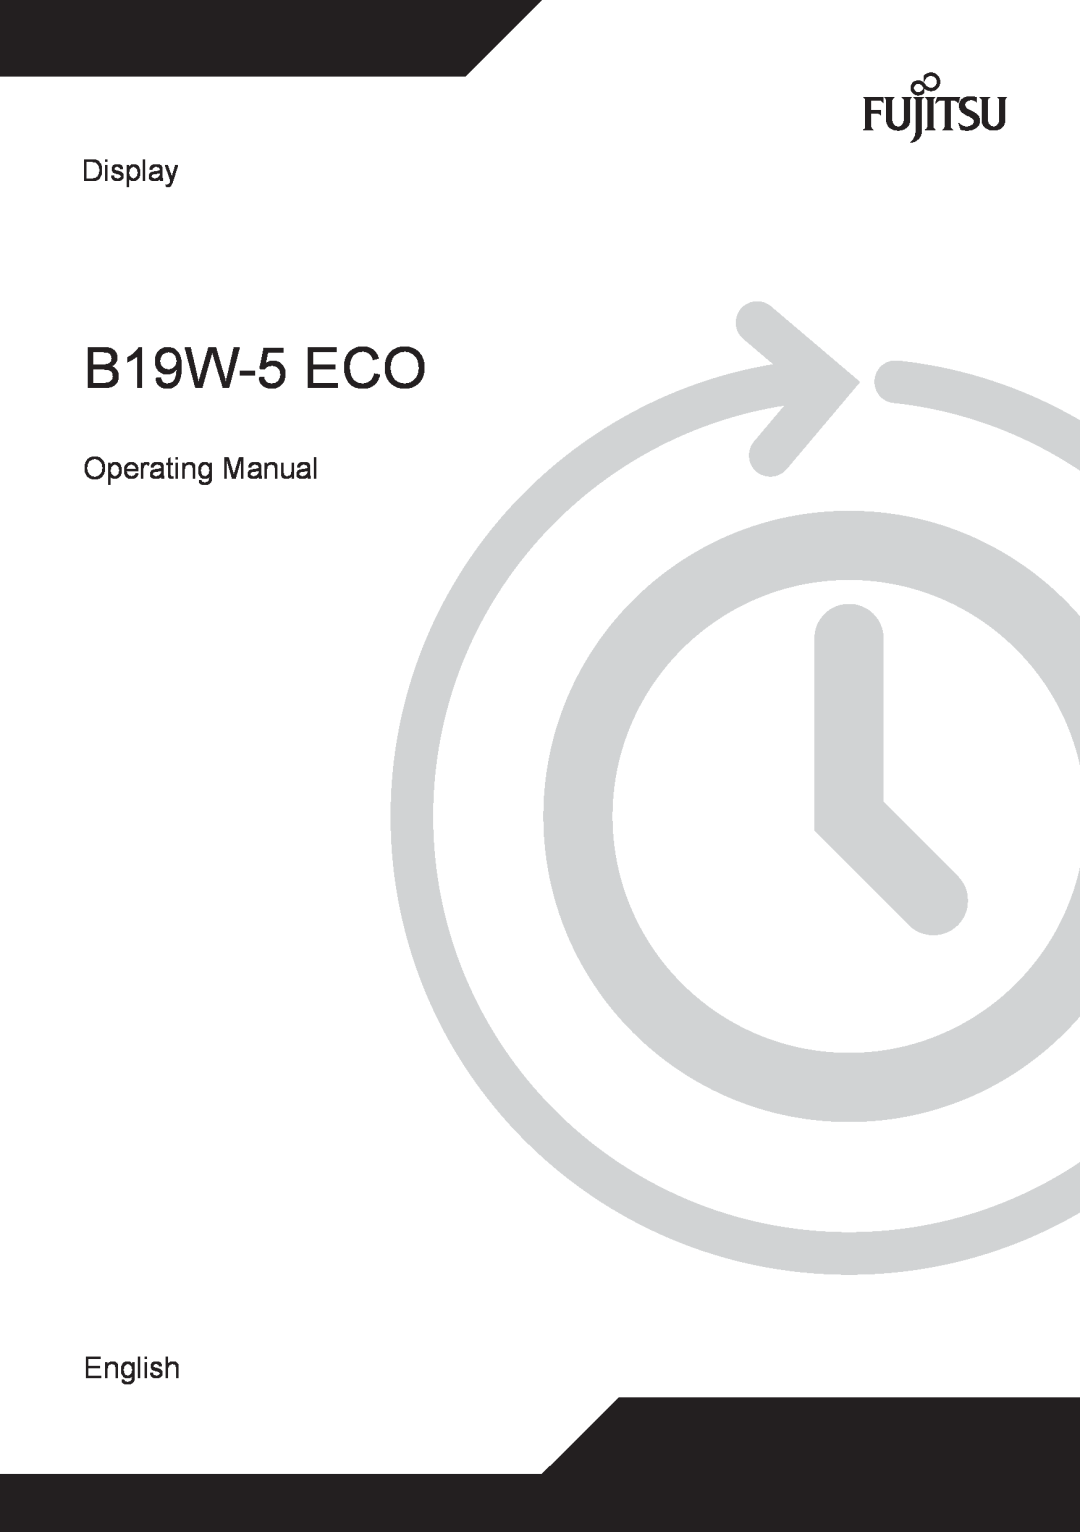 Fujitsu B19W-5 ECO manual Display, Operating Manual, English 